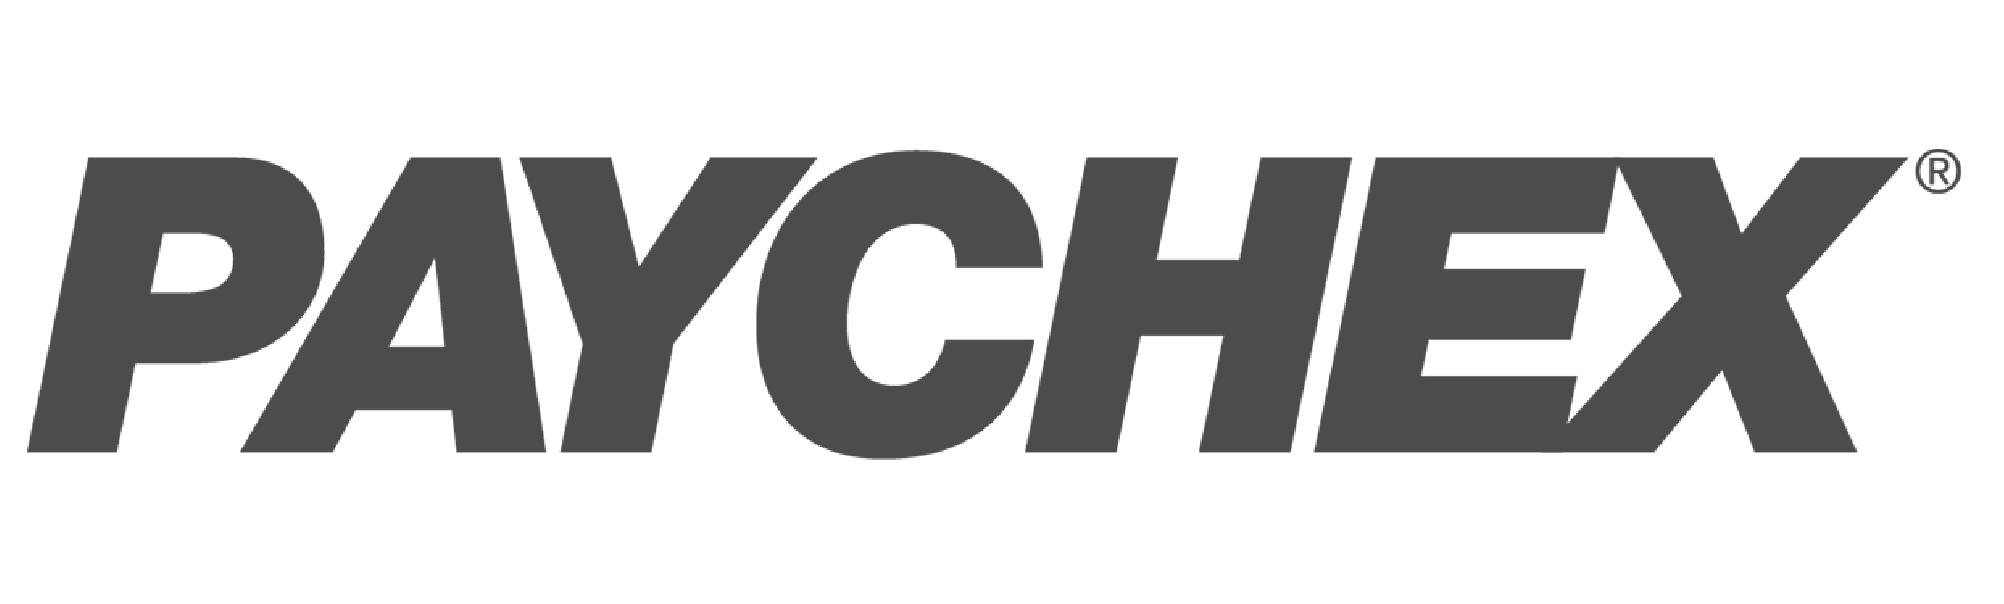 Paychex logo, a Tonic POS integration partner